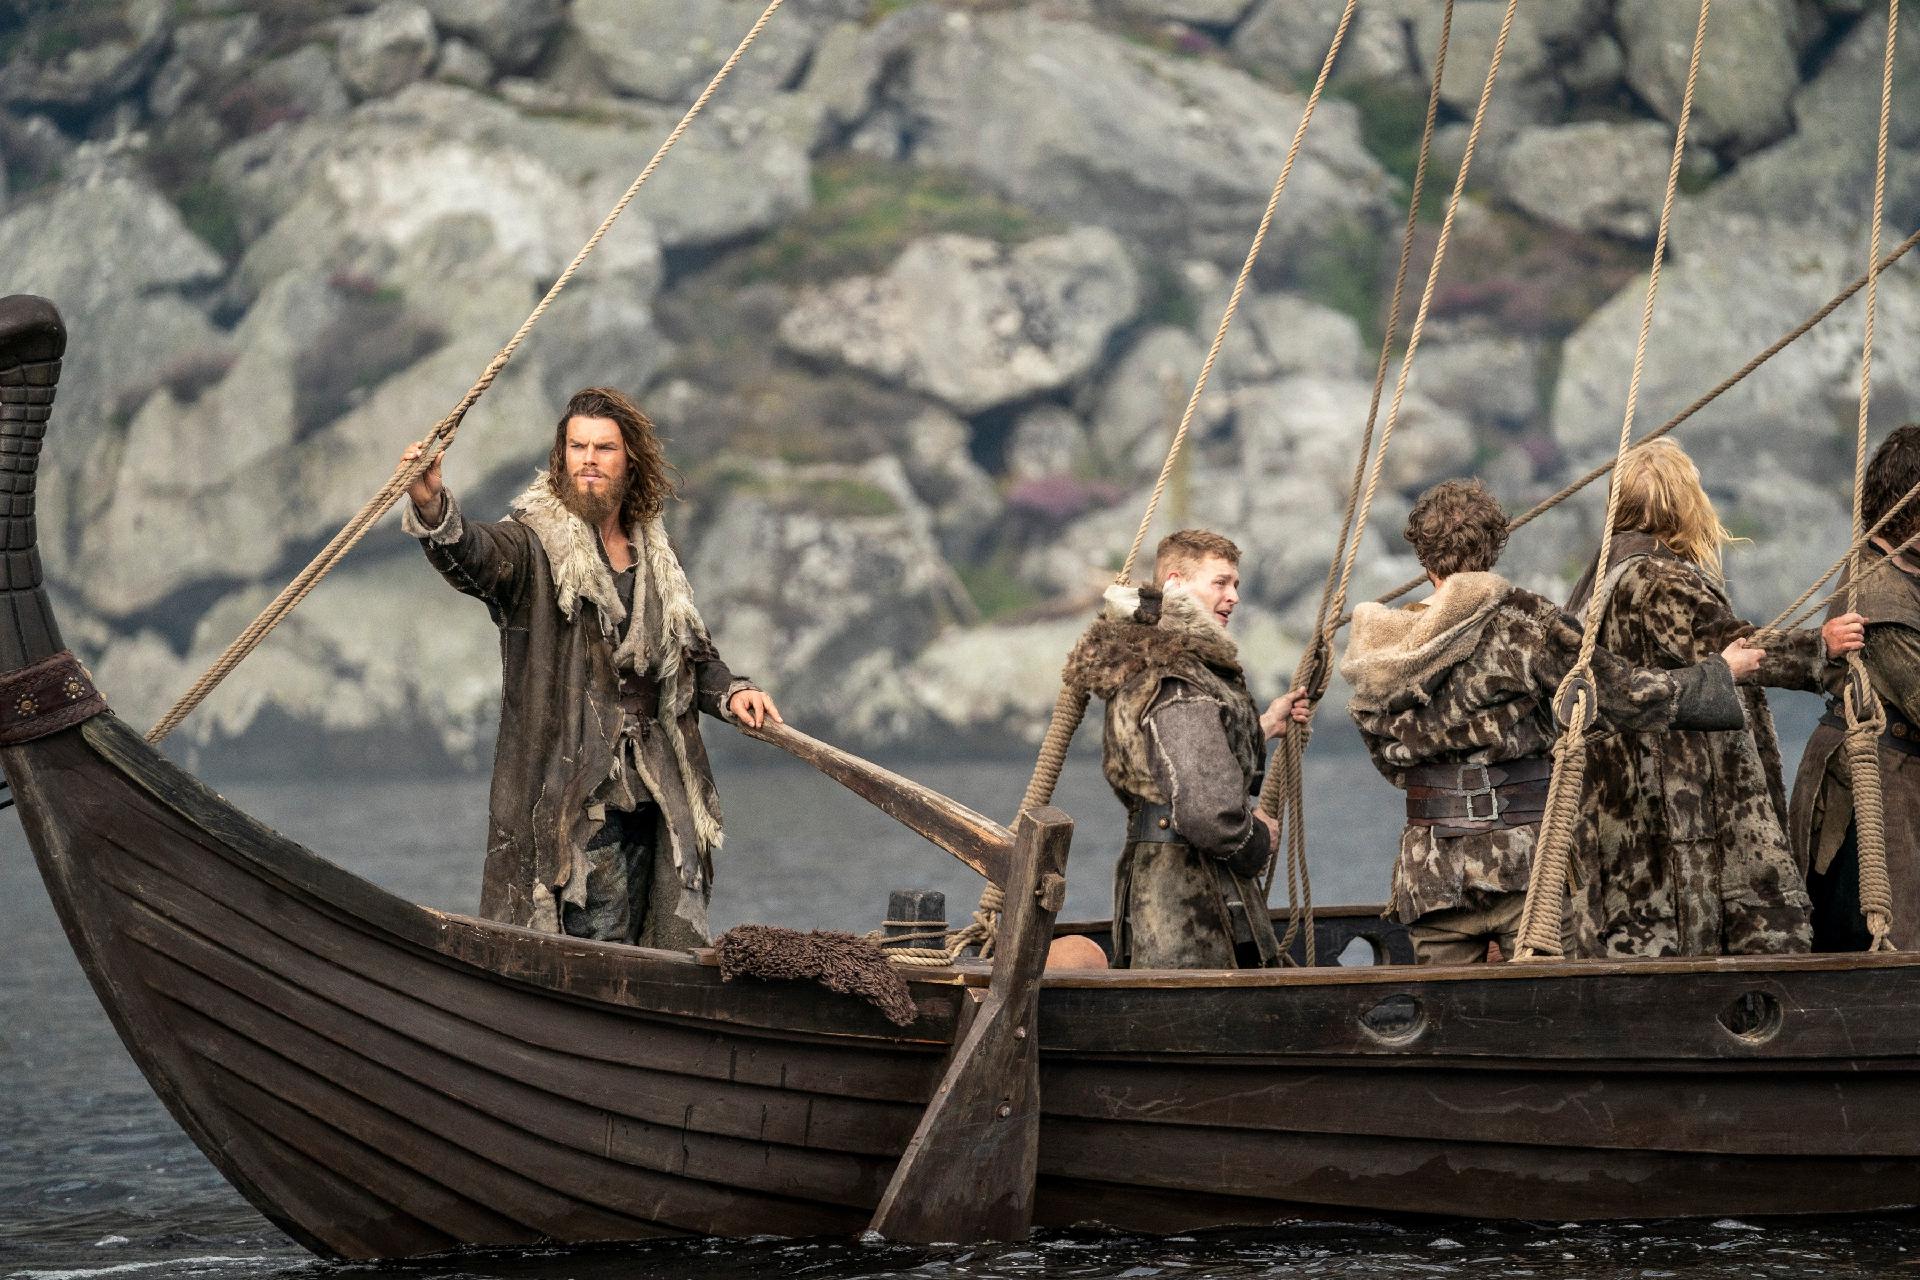 Vikings: Valhalla': Série derivada já está disponível na Netflix